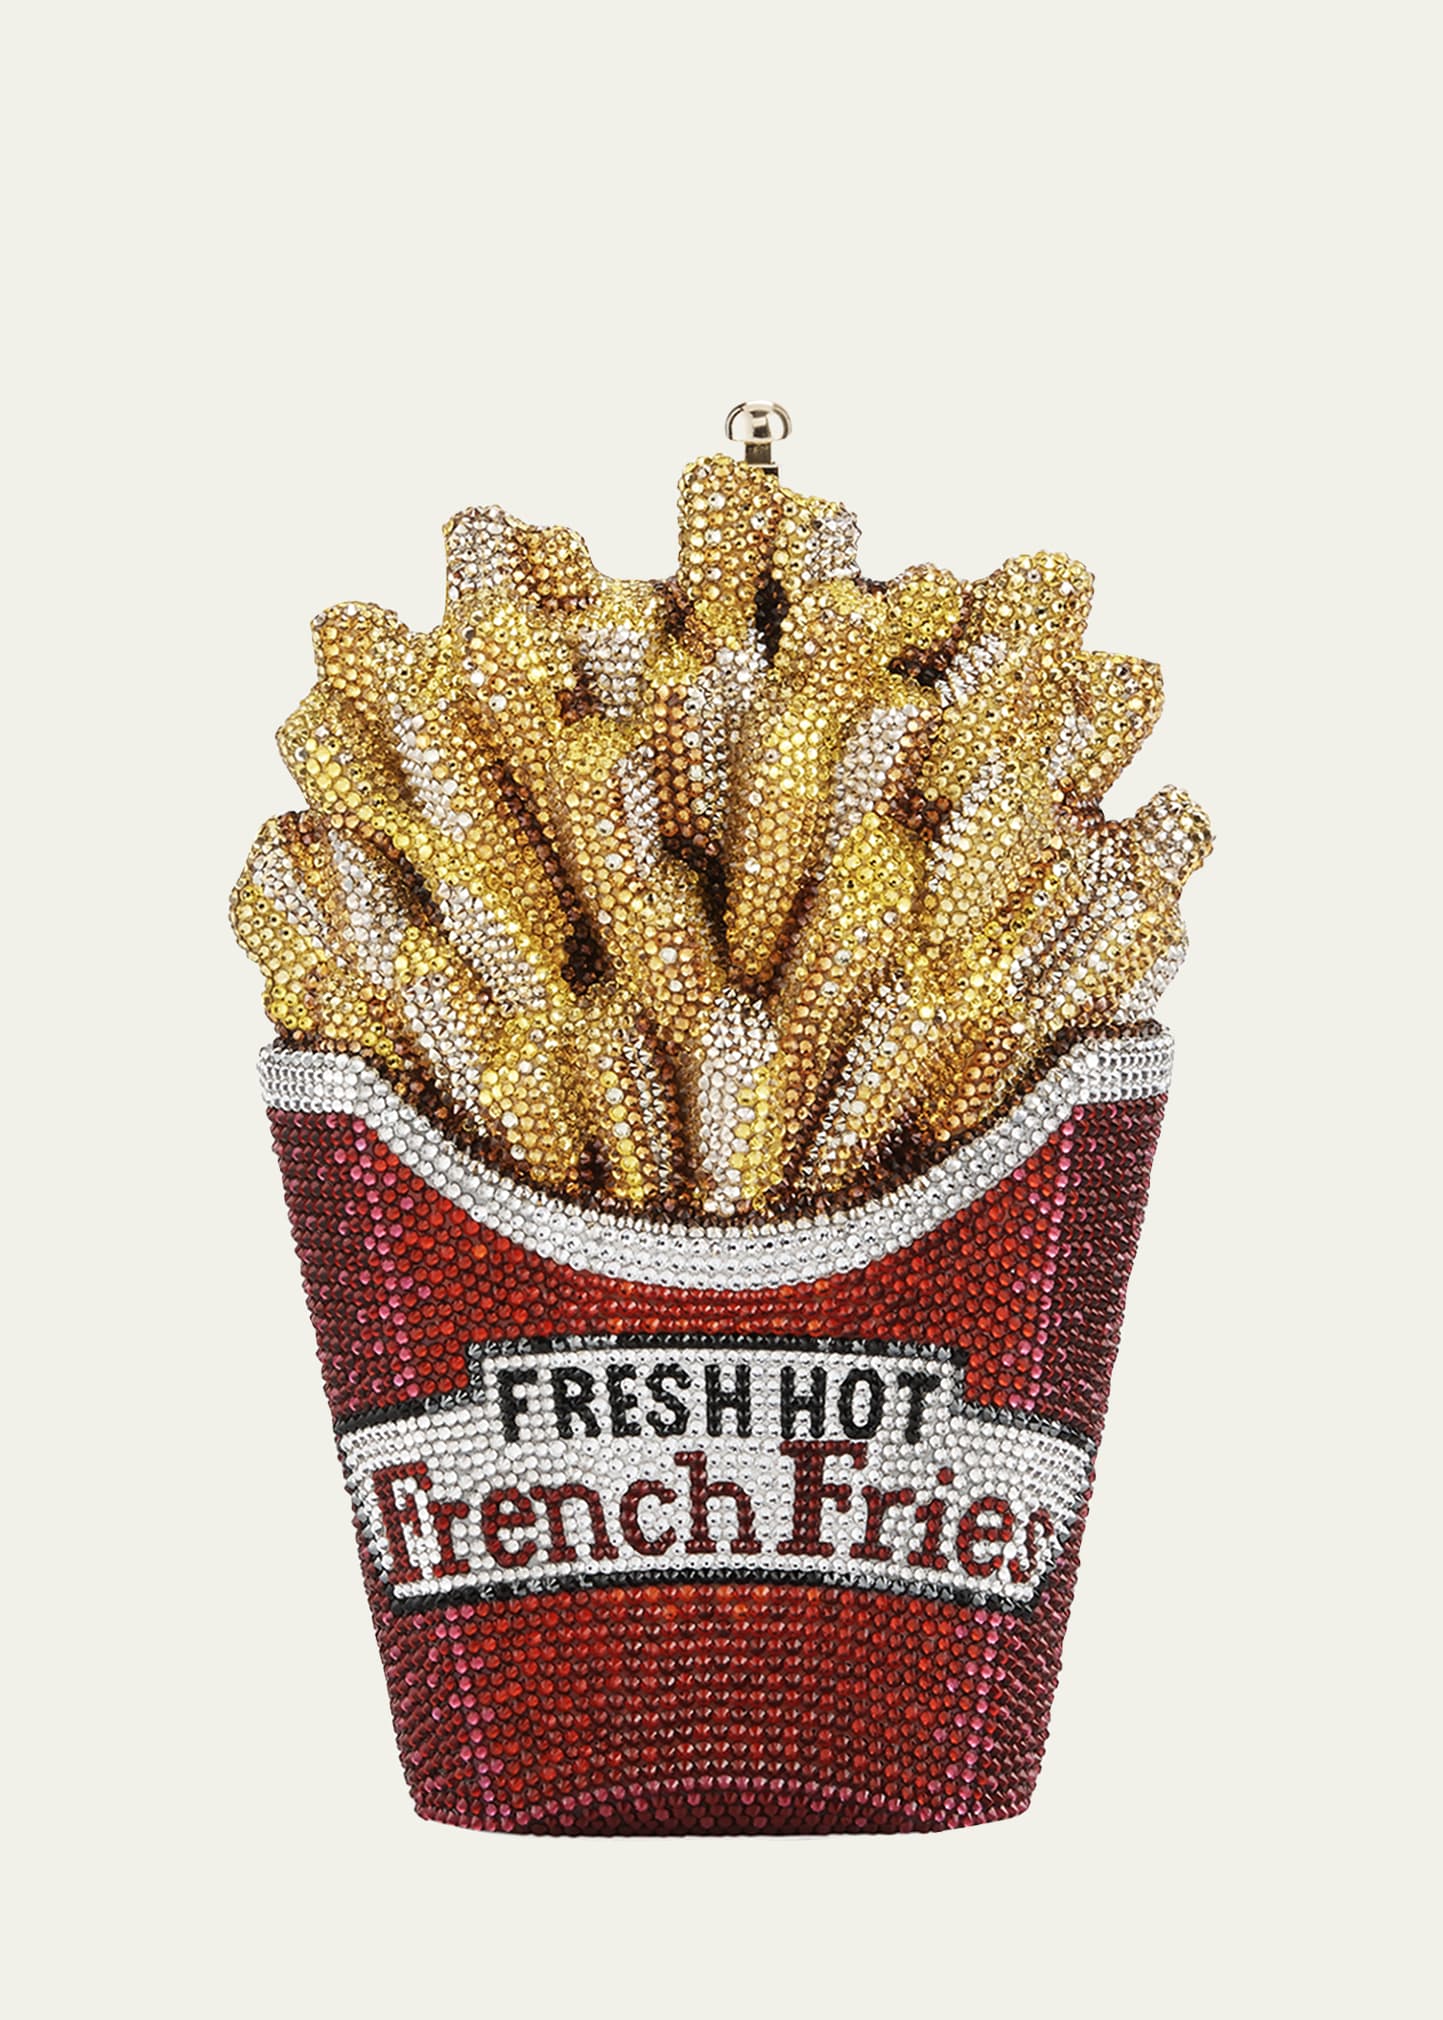 DEBIMY Women's French Fries Chips Rhinestone Clutch